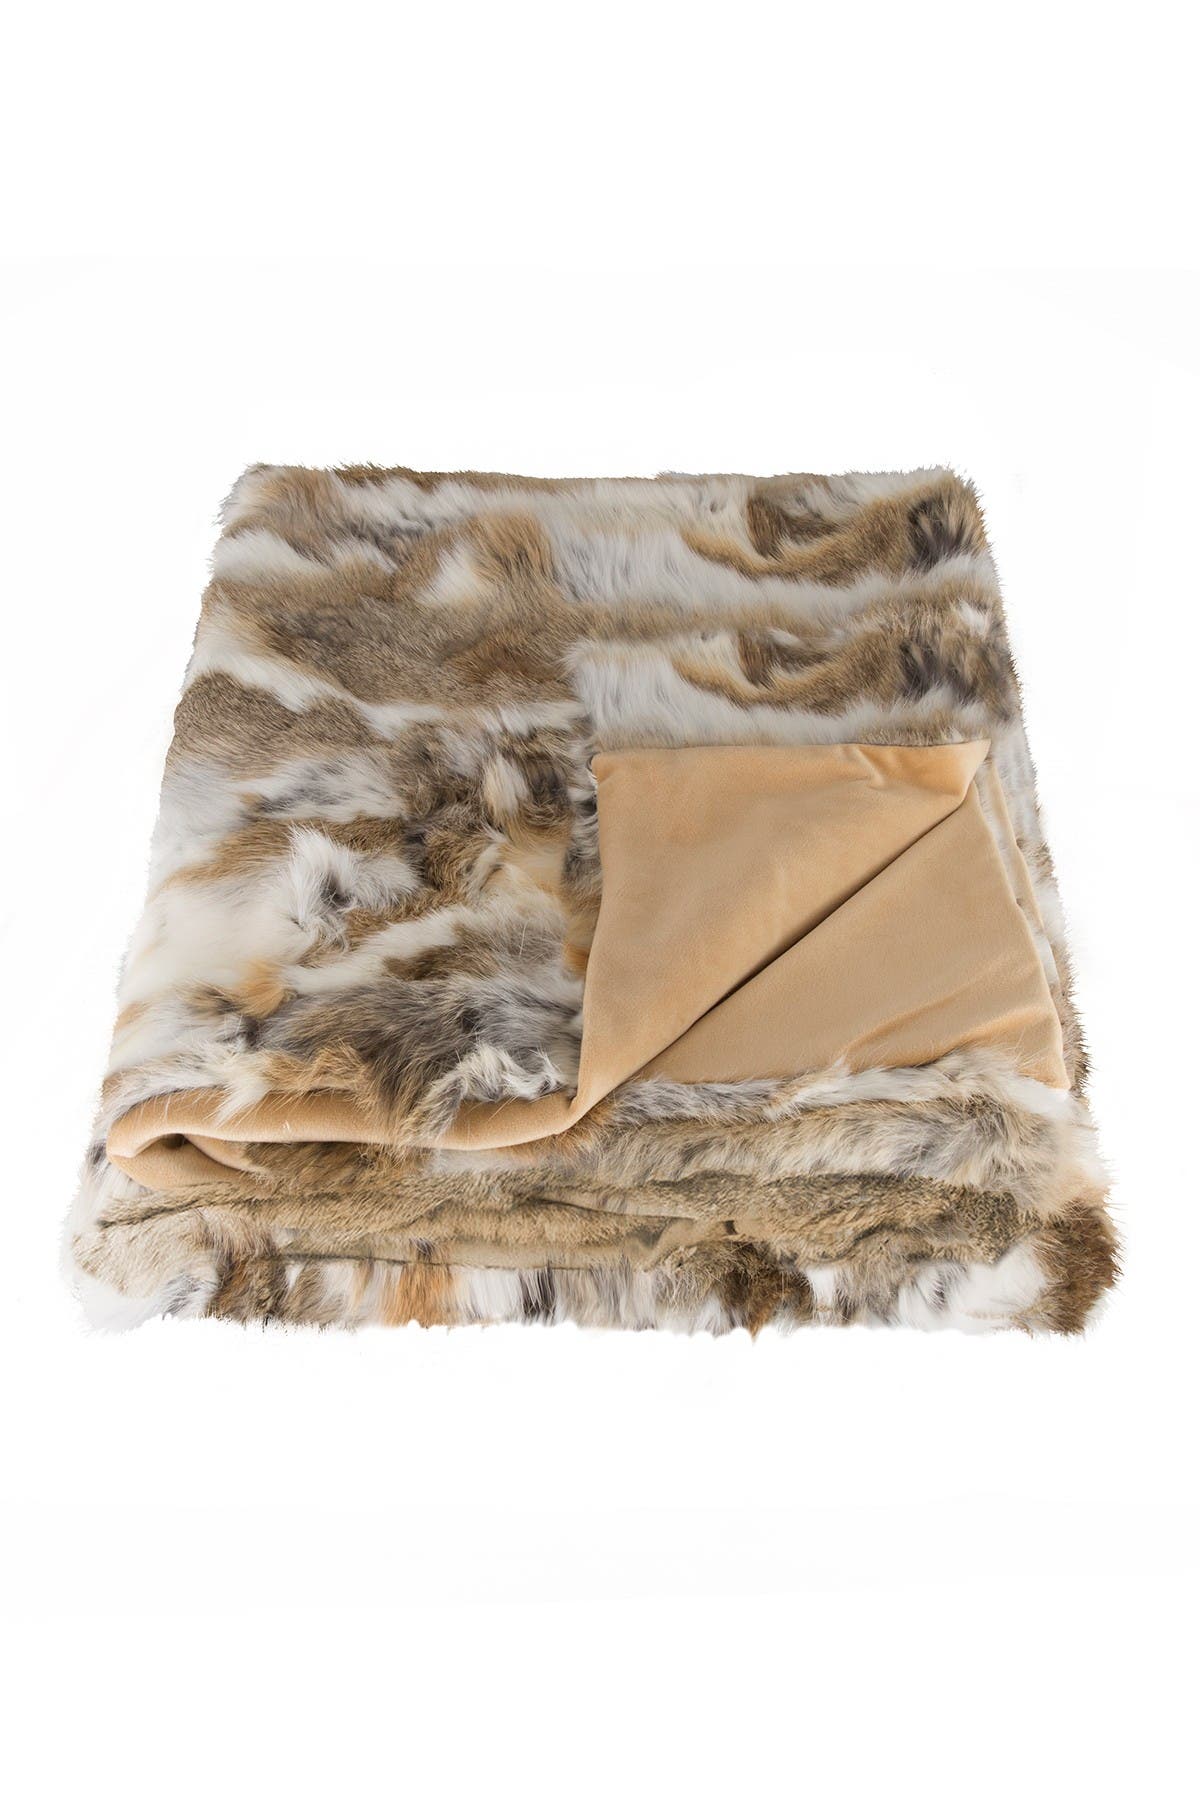 Natural Genuine Rabbit Fur Throw Blanket 50 X 60 Tan White Nordstrom Rack